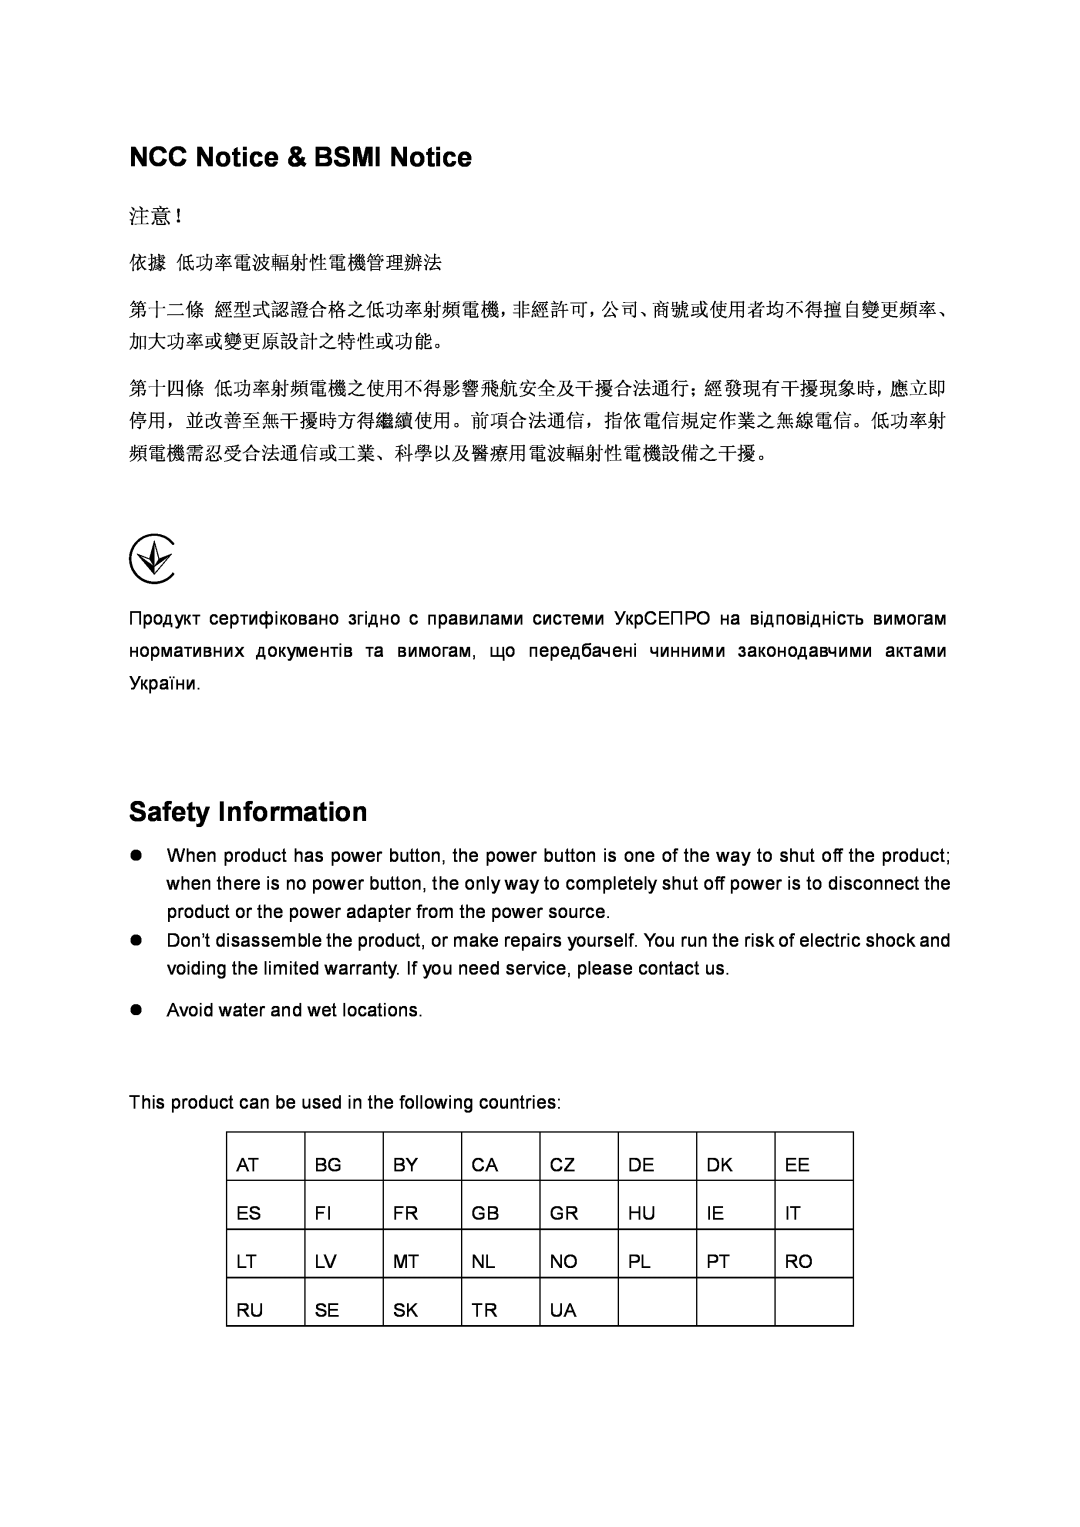 TP-Link Rev 1.0.0 1910010810 manual NCC Notice & BSMI Notice, Safety Information 